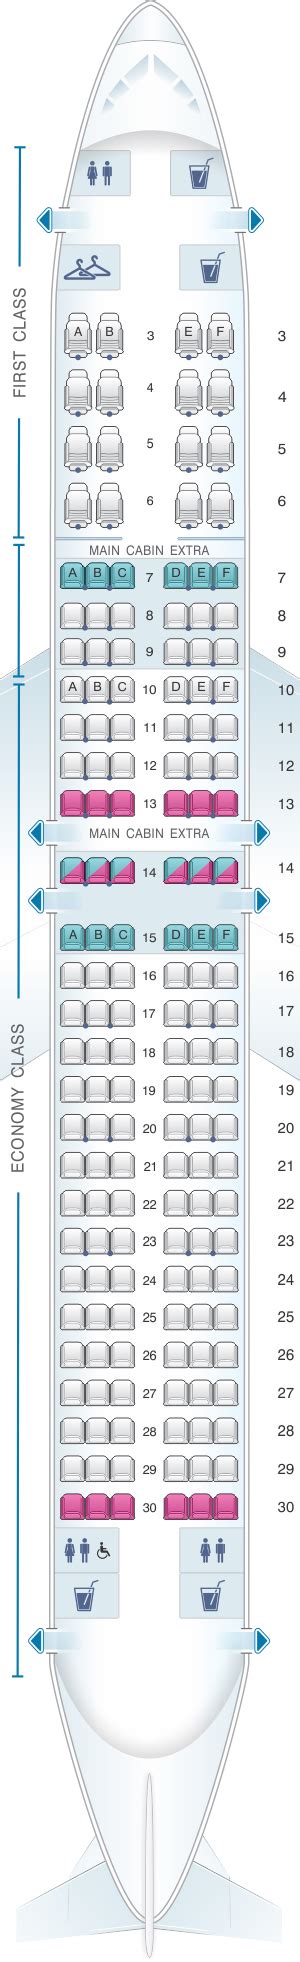 30. Economy. Standard seat. 31. 15.9 -17